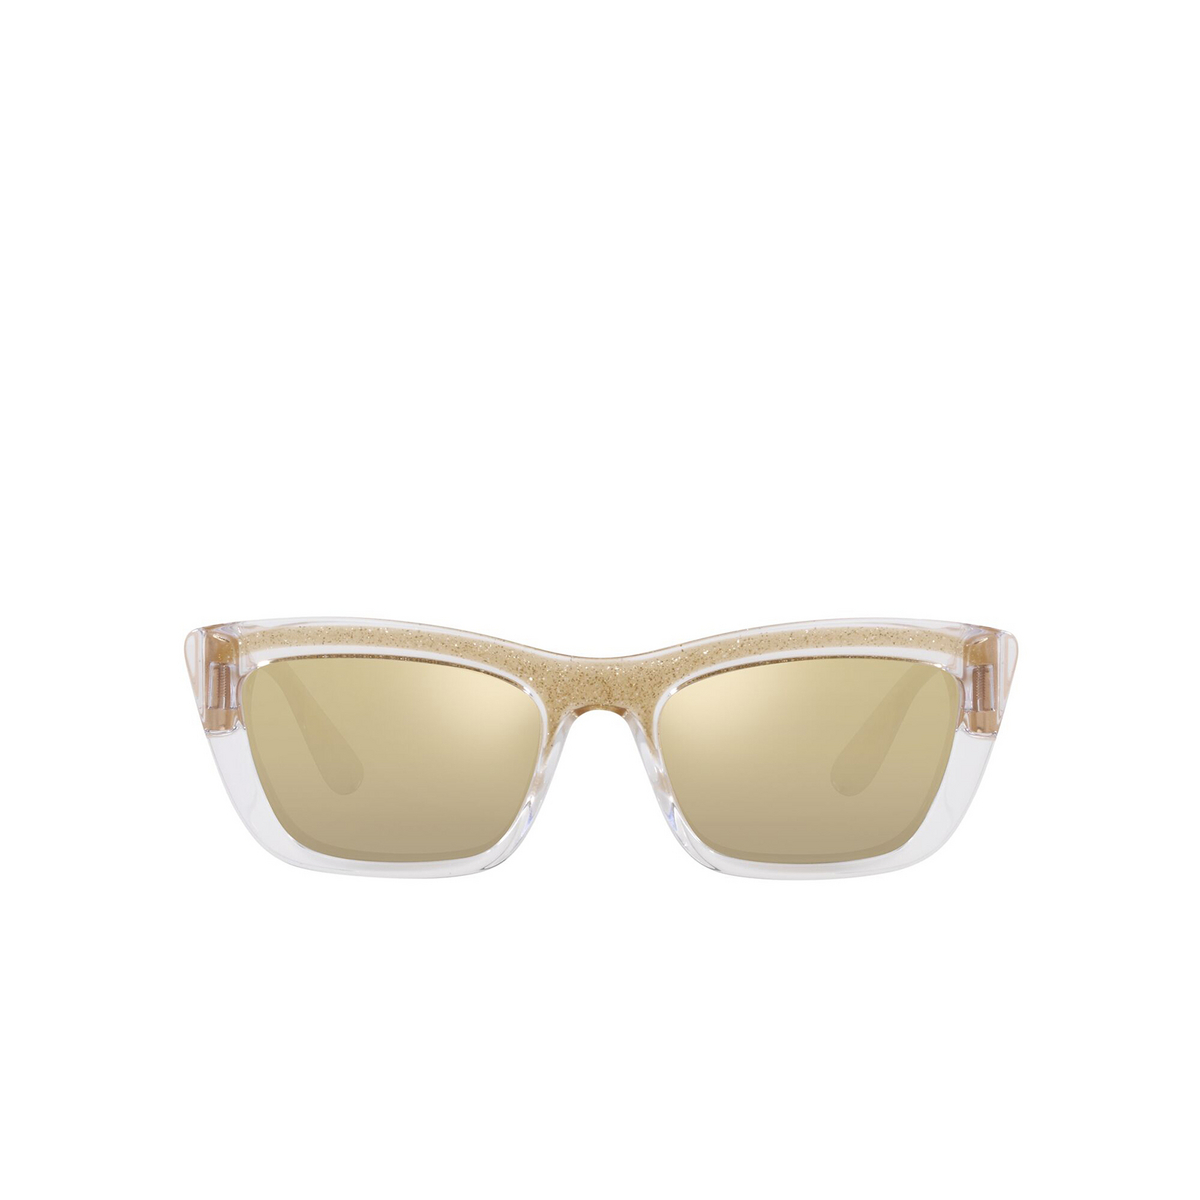 Dolce & Gabbana® Cat-eye Sunglasses: DG6171 color Transparent/gold Glitter 3352V9 - front view.